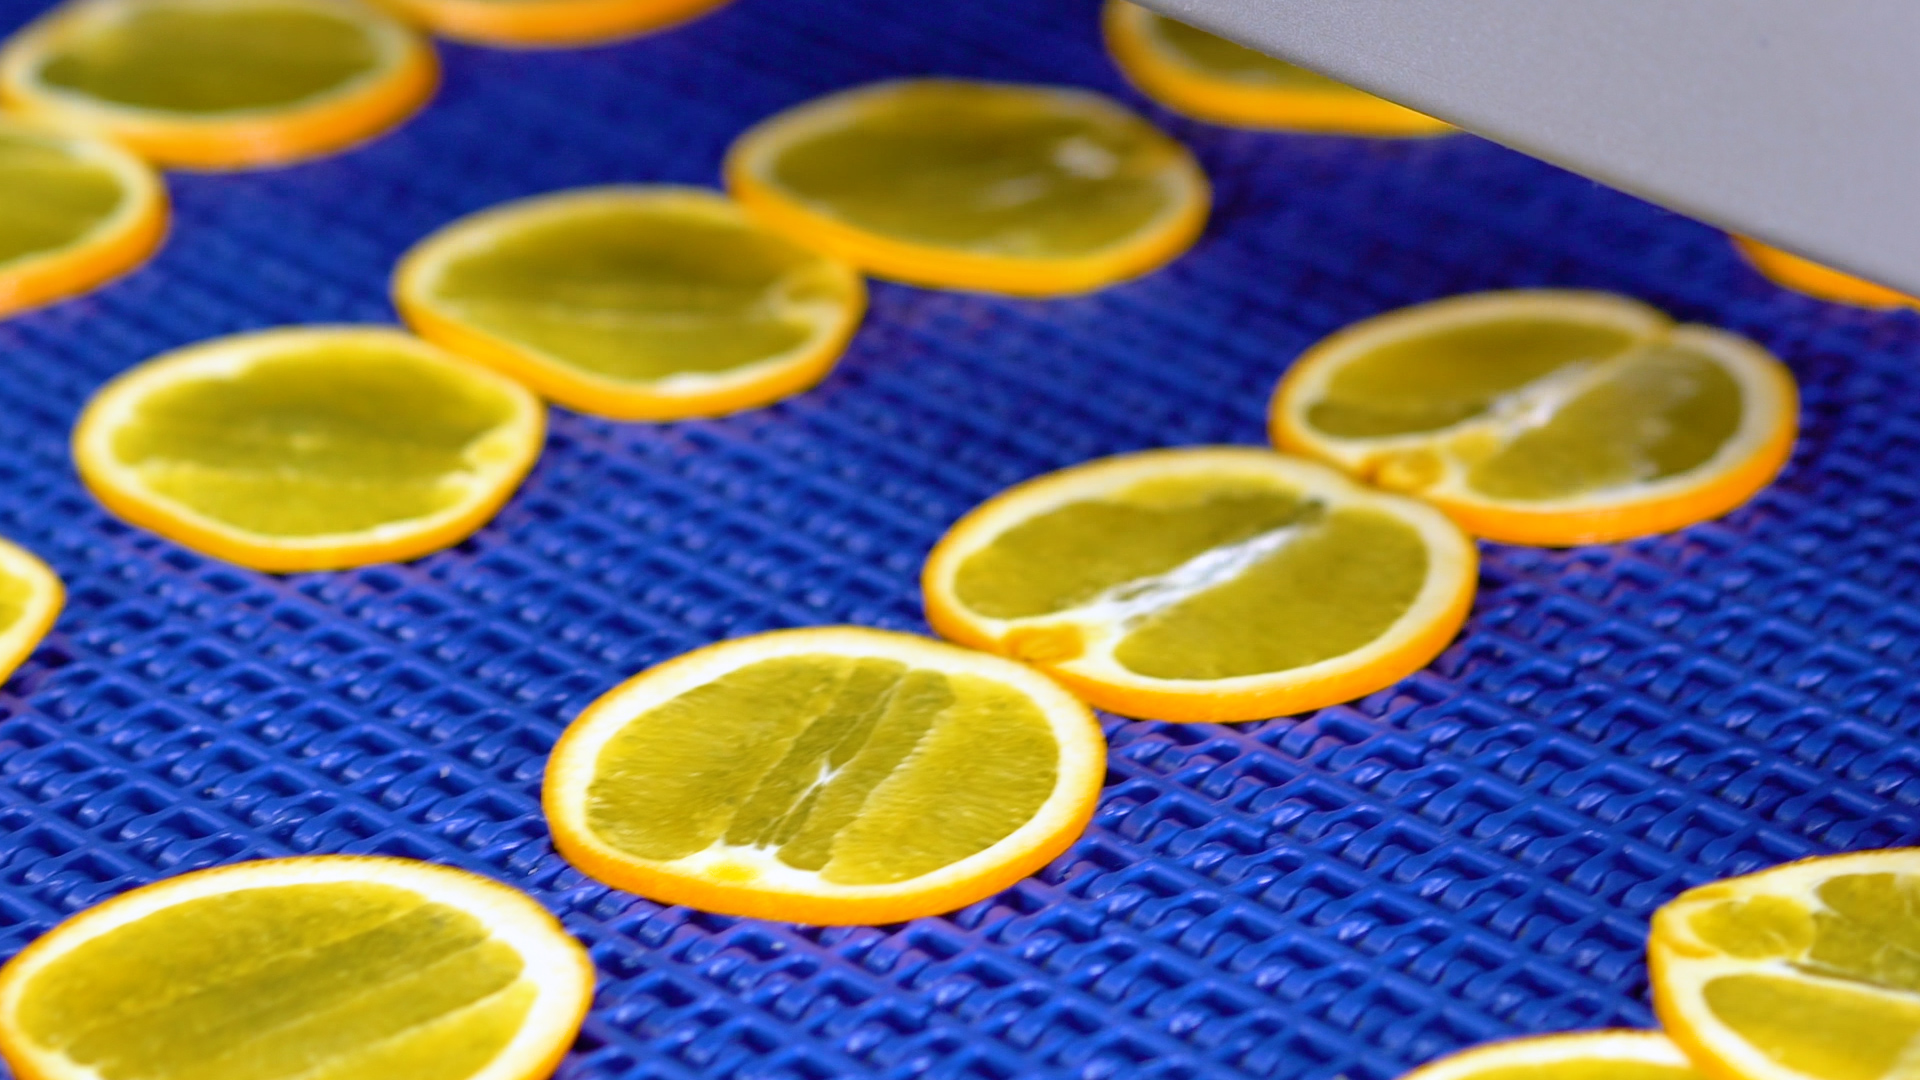 Lemon sliced using our Industrial Citrus Slicers.